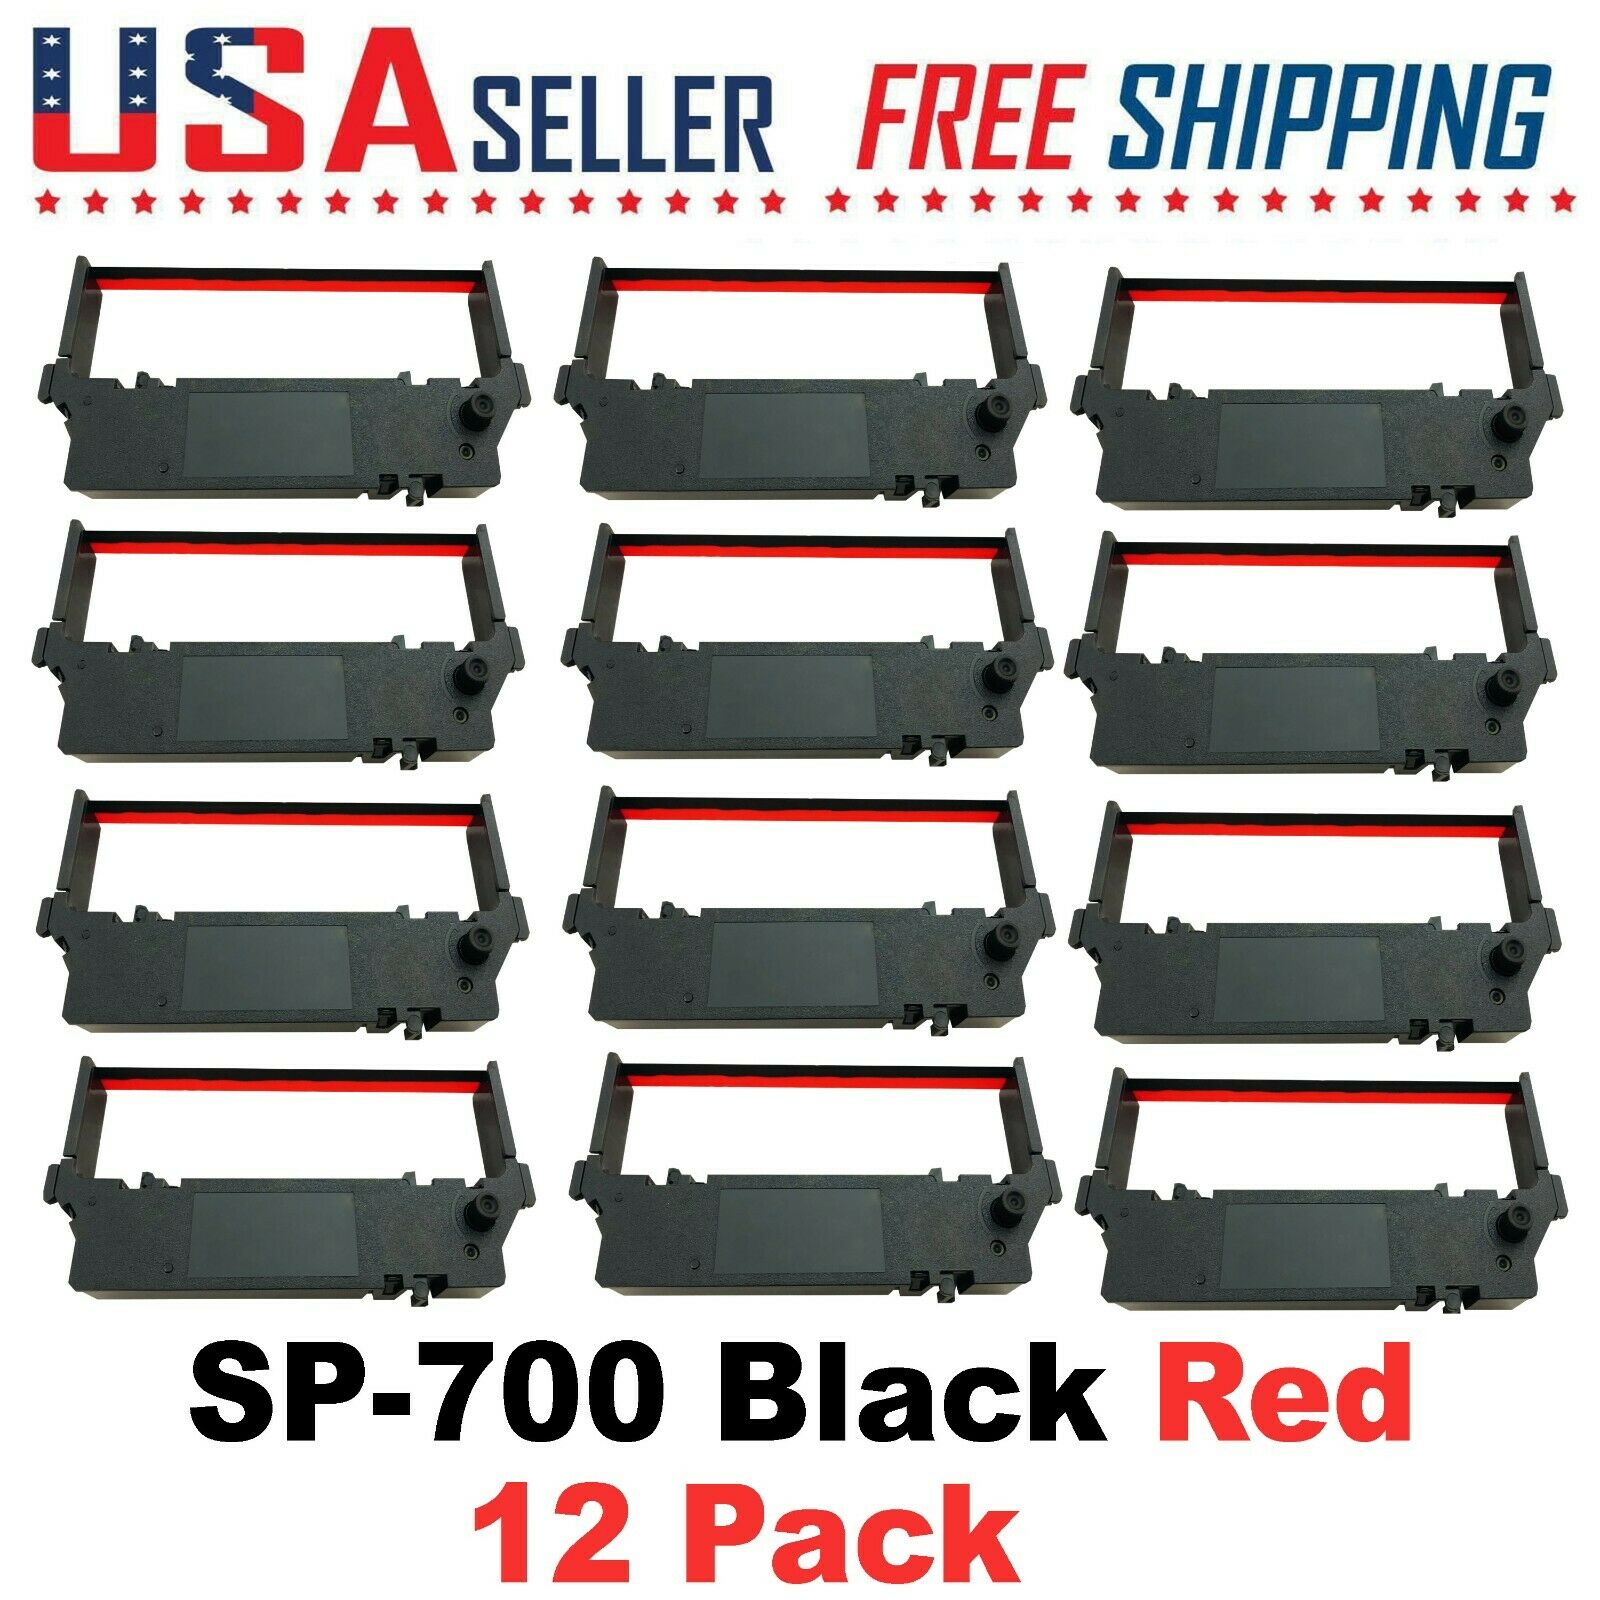 12 Pack - Star Sp-700 Black / Red Printer Ribbon Ink Rc700br, Sp700, 712, 742🔴